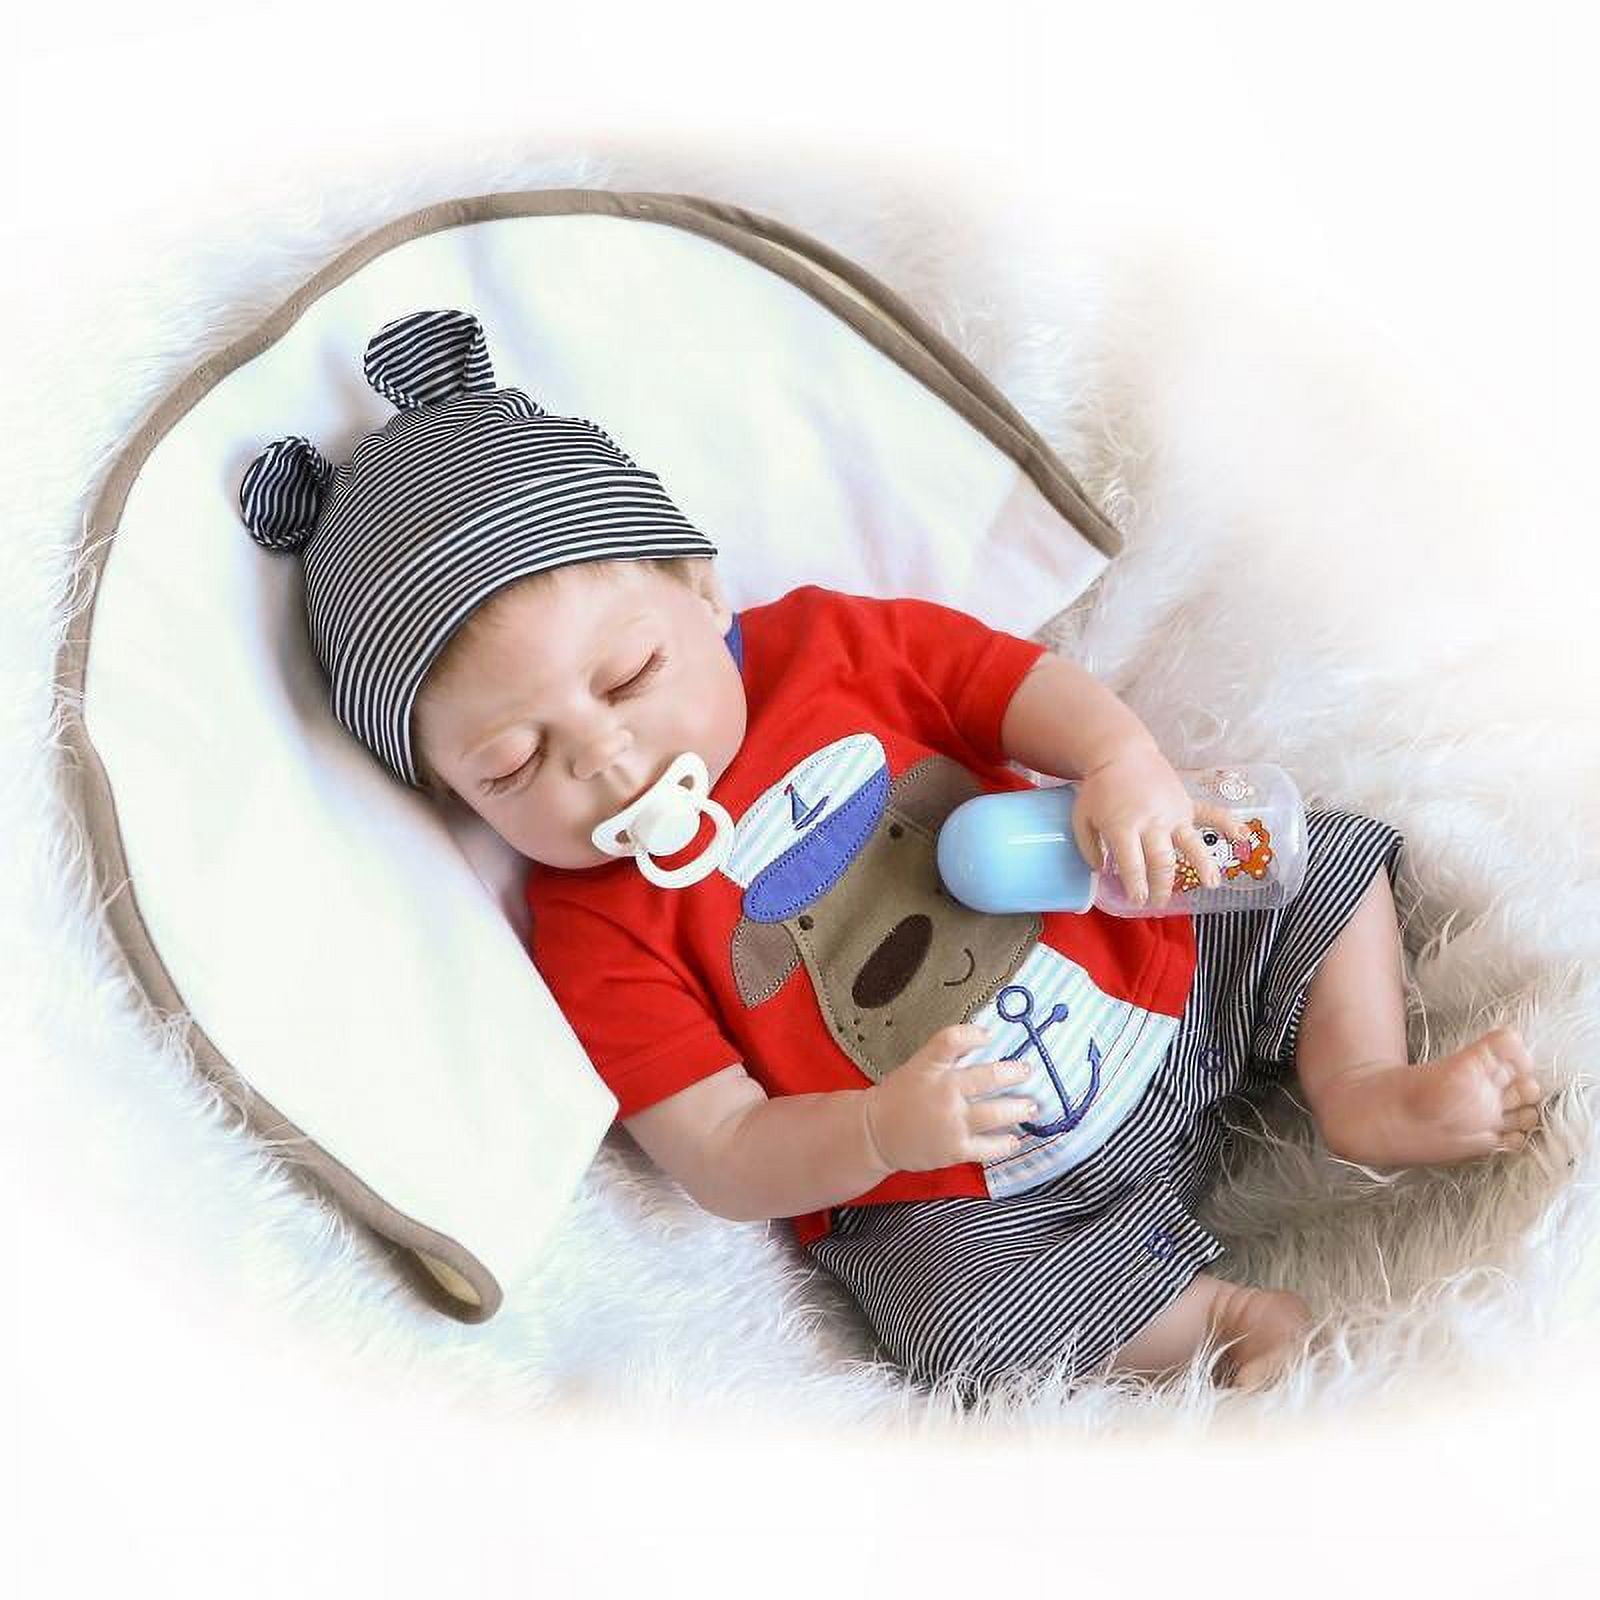 Ktaxon Full Body Silicone Reborn Baby Sleeping Doll & Reviews